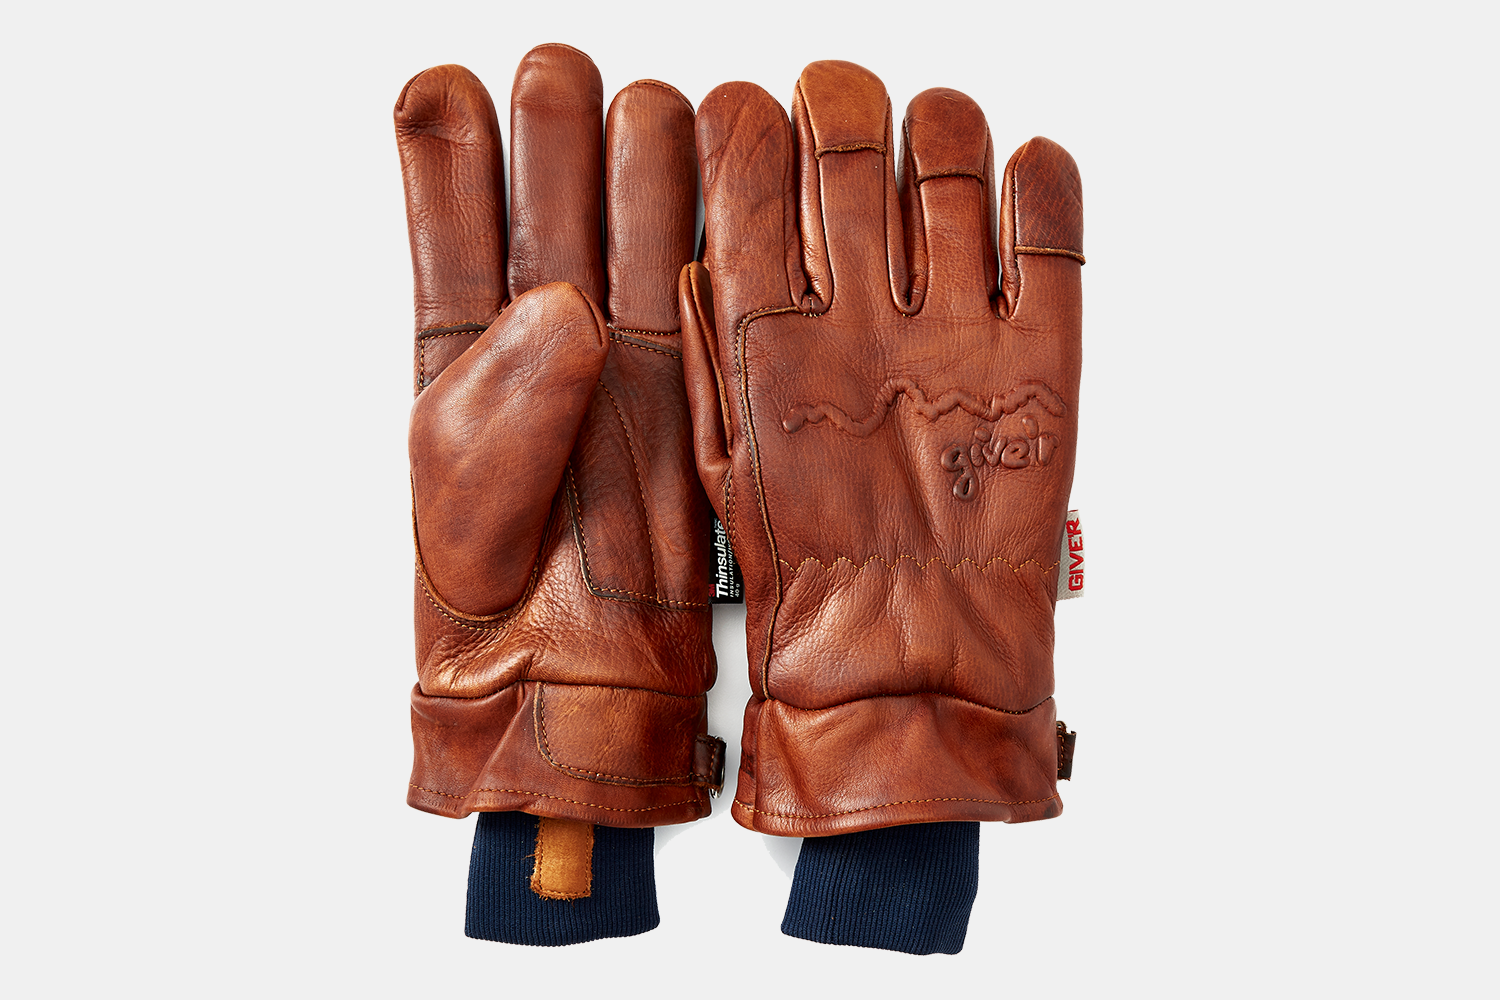 Give’r 4 Season Glove With Wax Coating